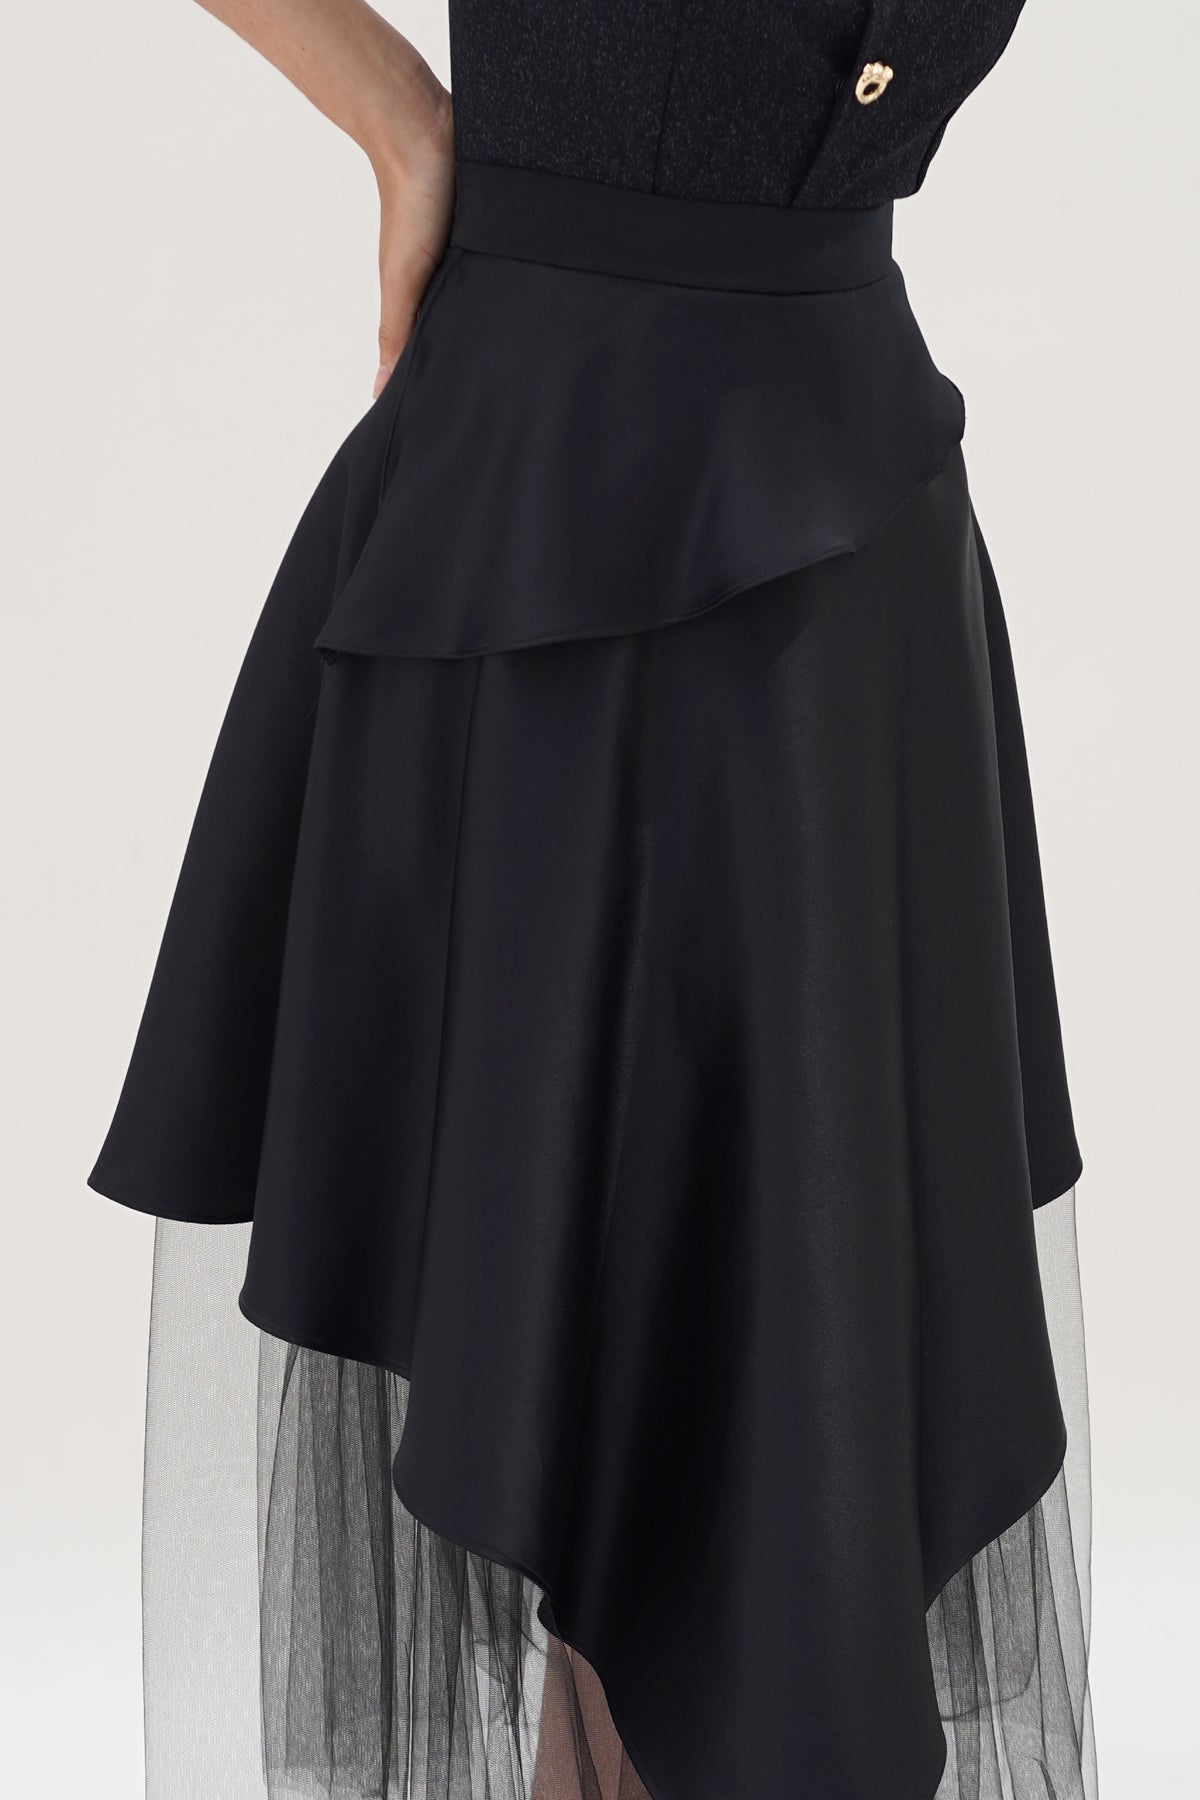 Vinci Skirt In Black